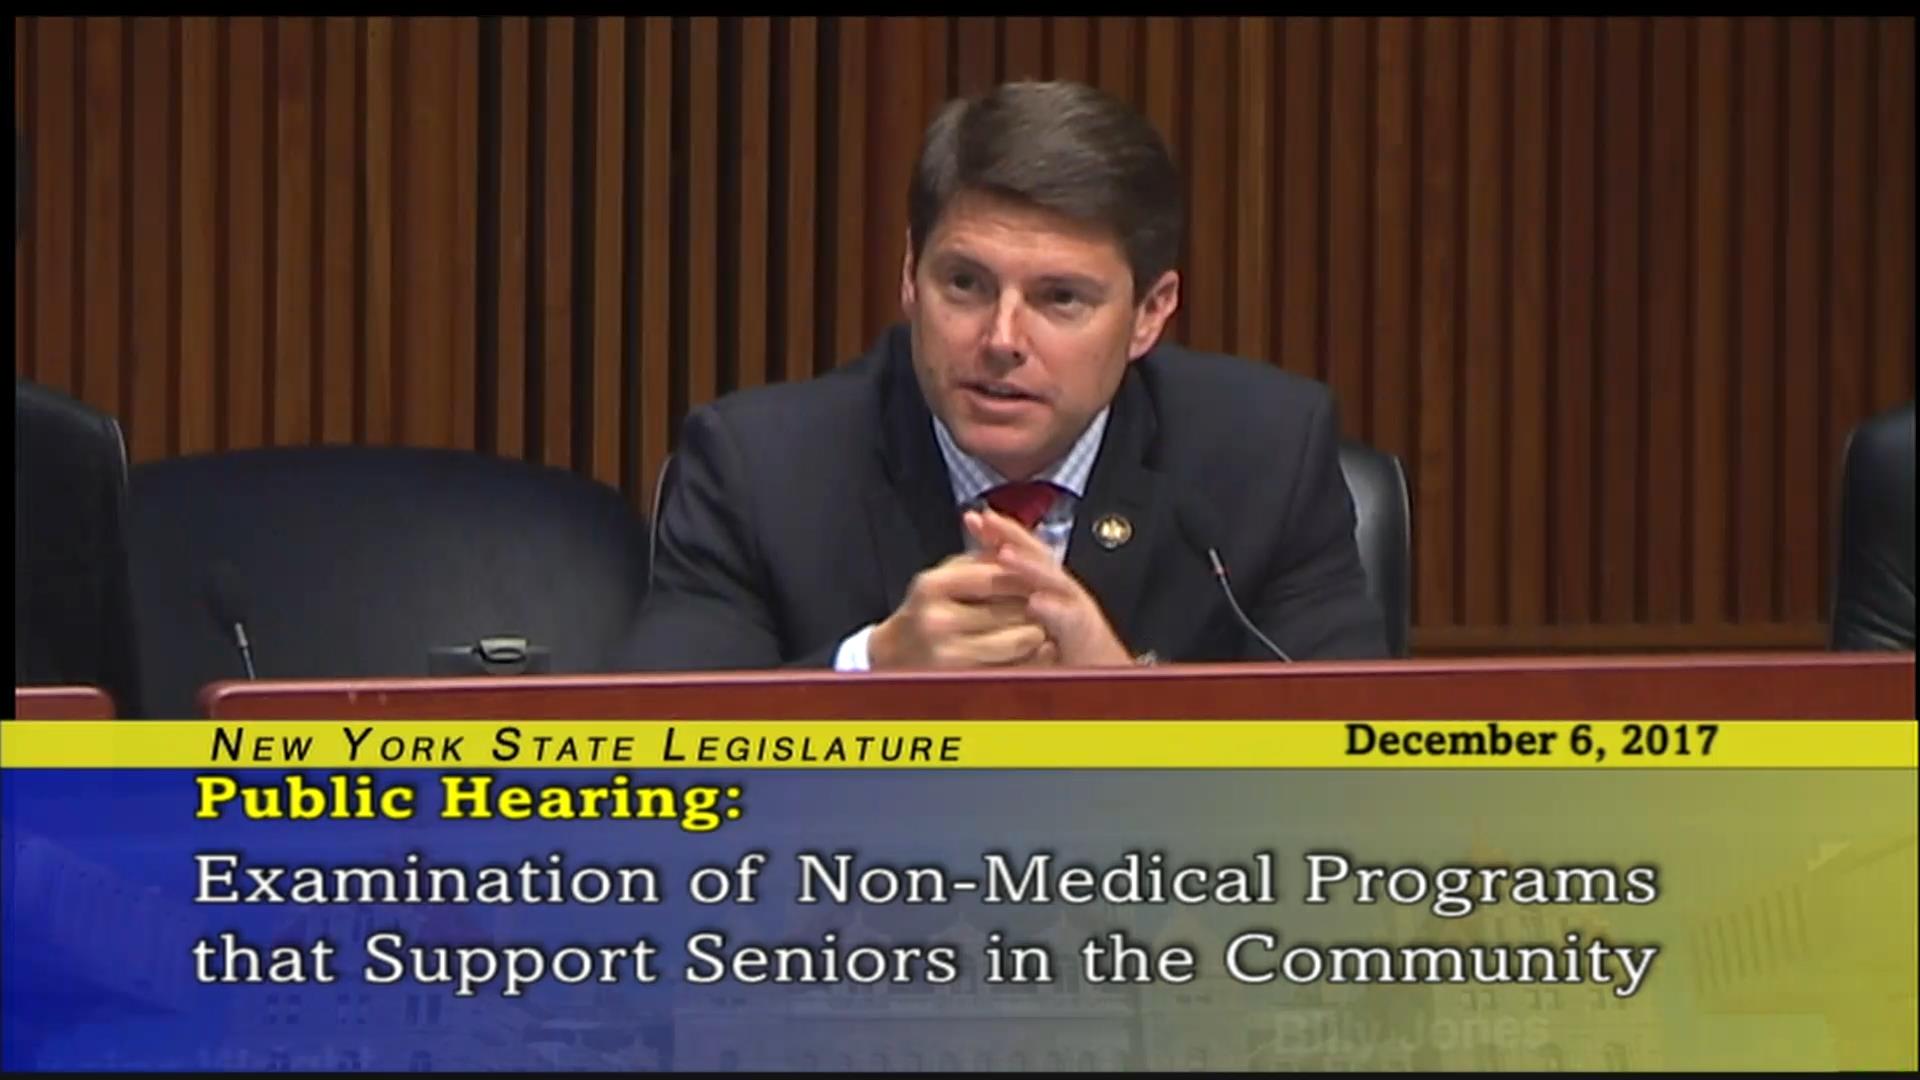 Assemblyman Jones Speaks on Non-Medical Programs